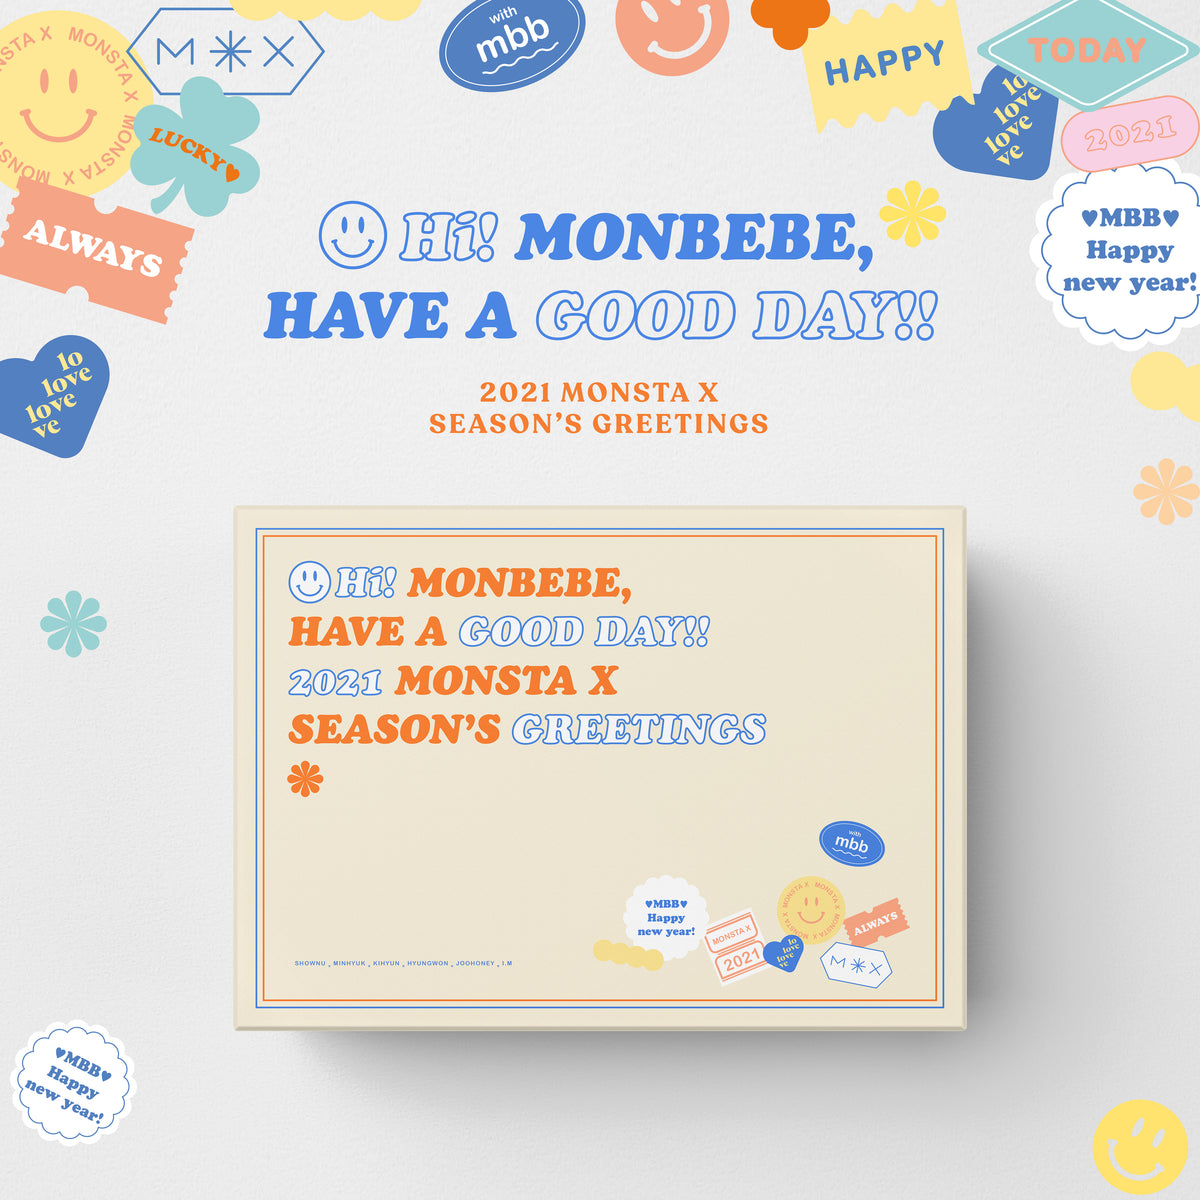 MONSTA X 2021 SEASON'S GREETINGS - HI! MONBEBE, HAVE A GOOD DAY!!
– SubK Shop
